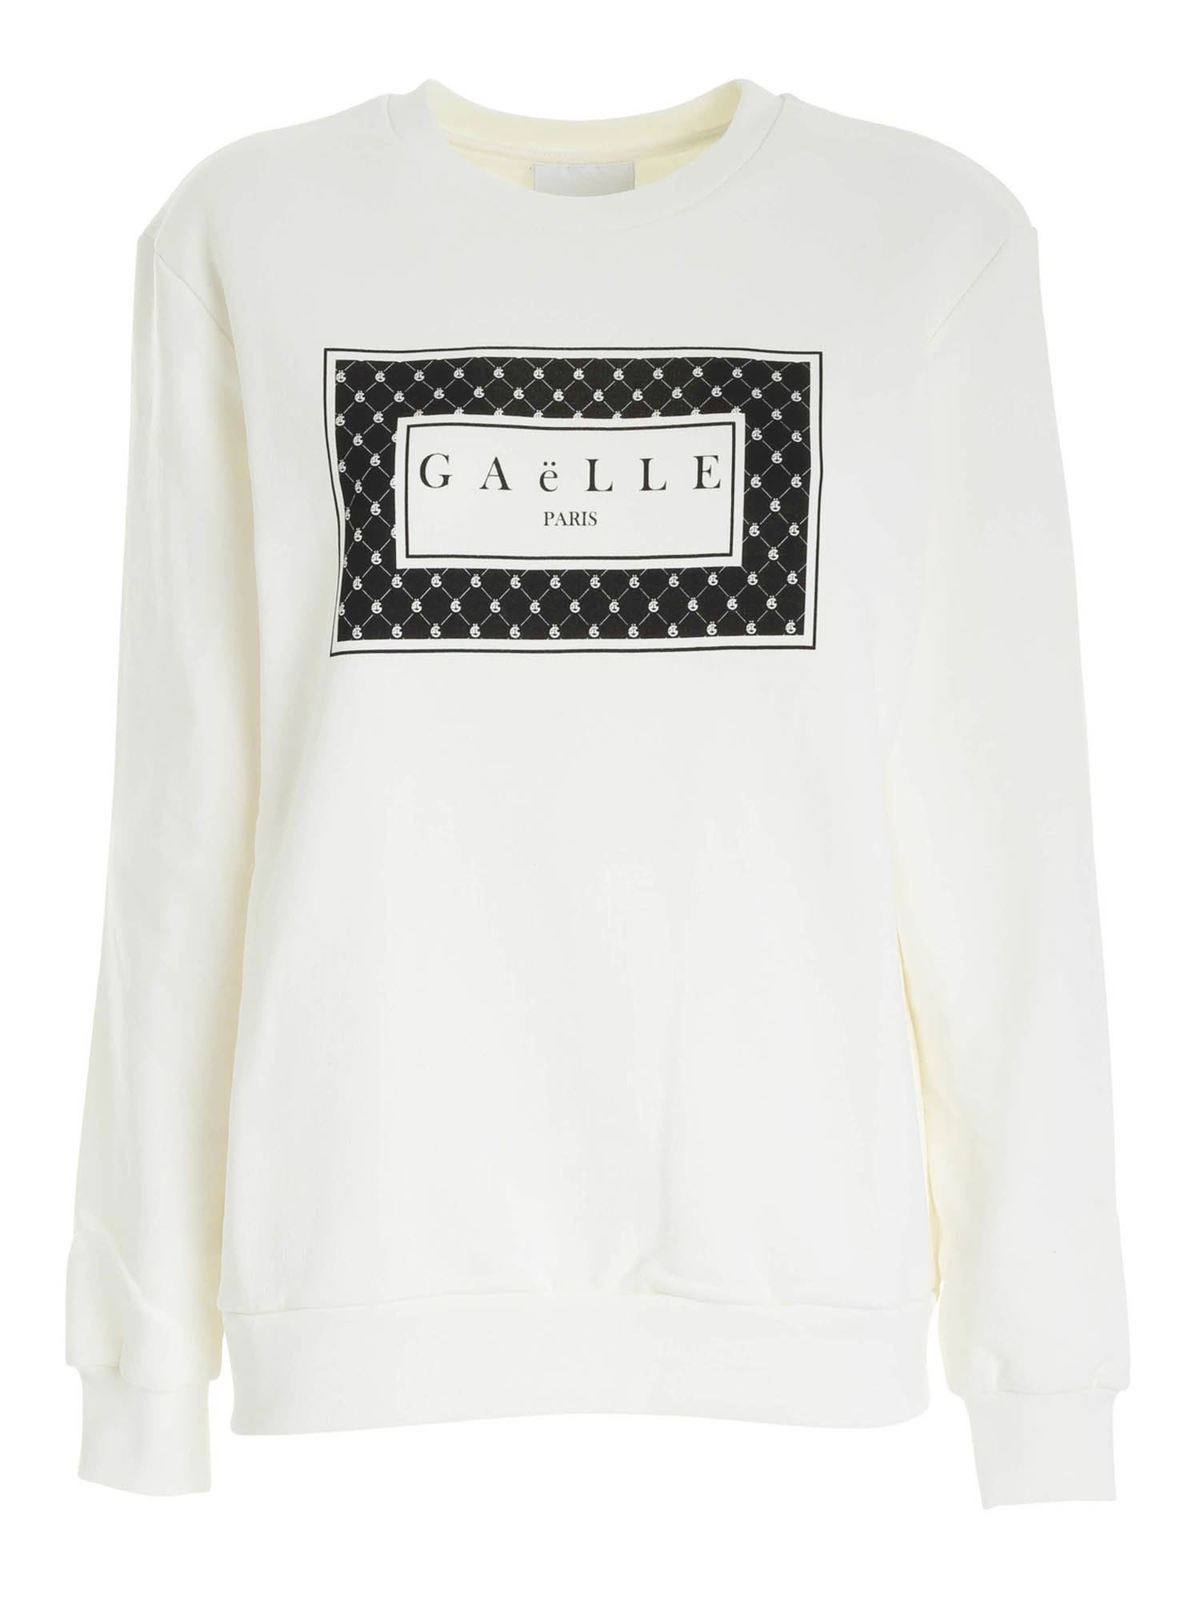 Gaelle Paris - Felpa bianca con stampa logo a contrasto - Felpe e maglie -  GBD7046OFFWHITE